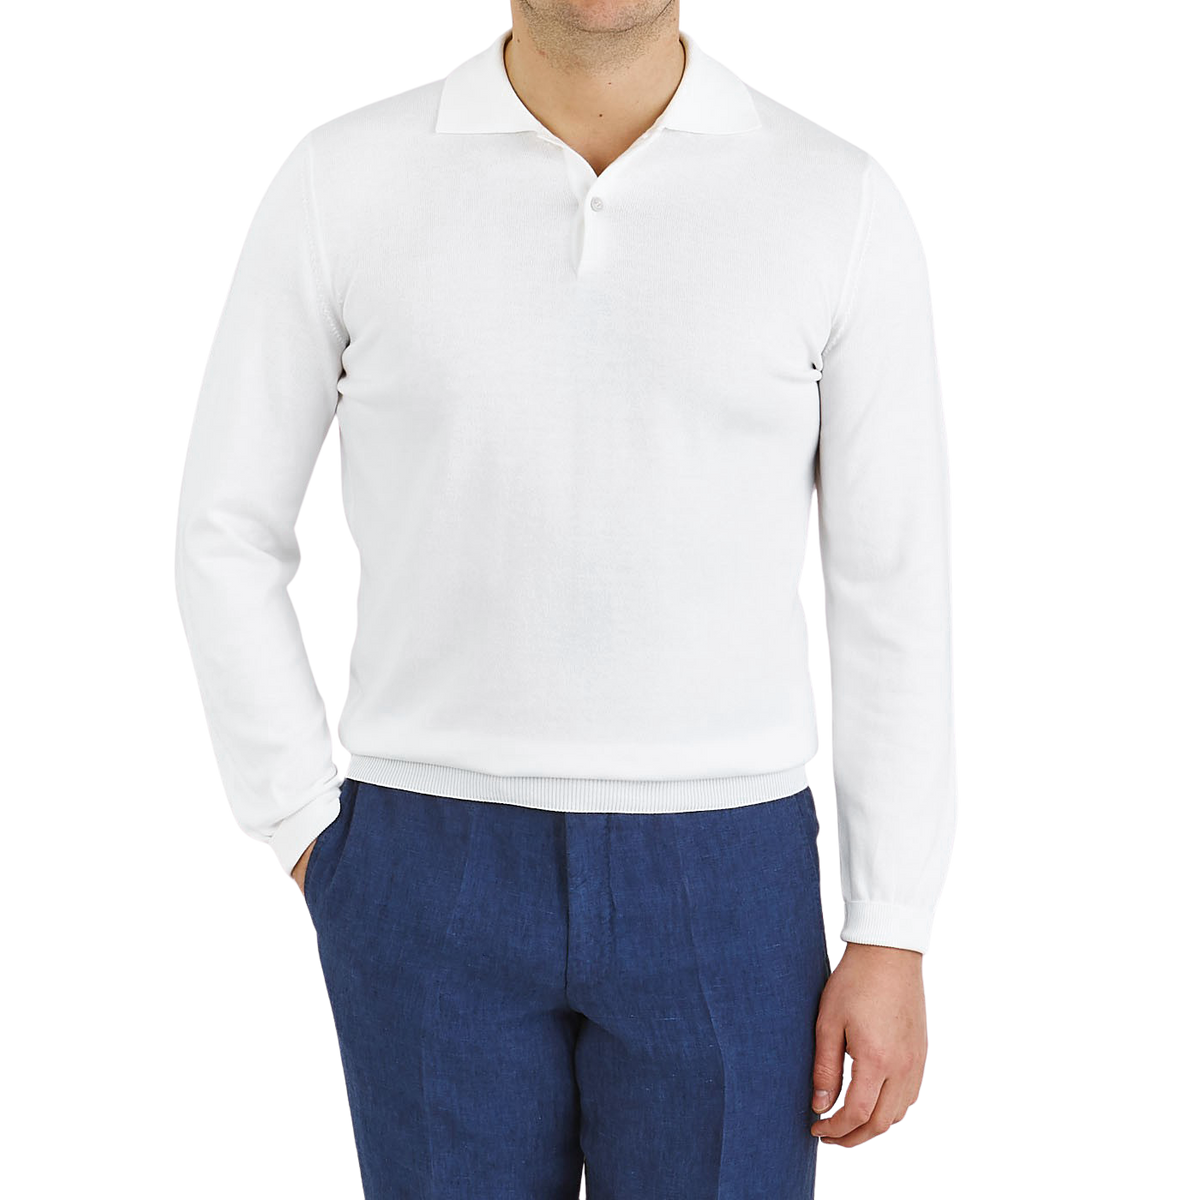 Mauro Ottaviani Clear White Cotton Long Sleeve Polo Shirt Front